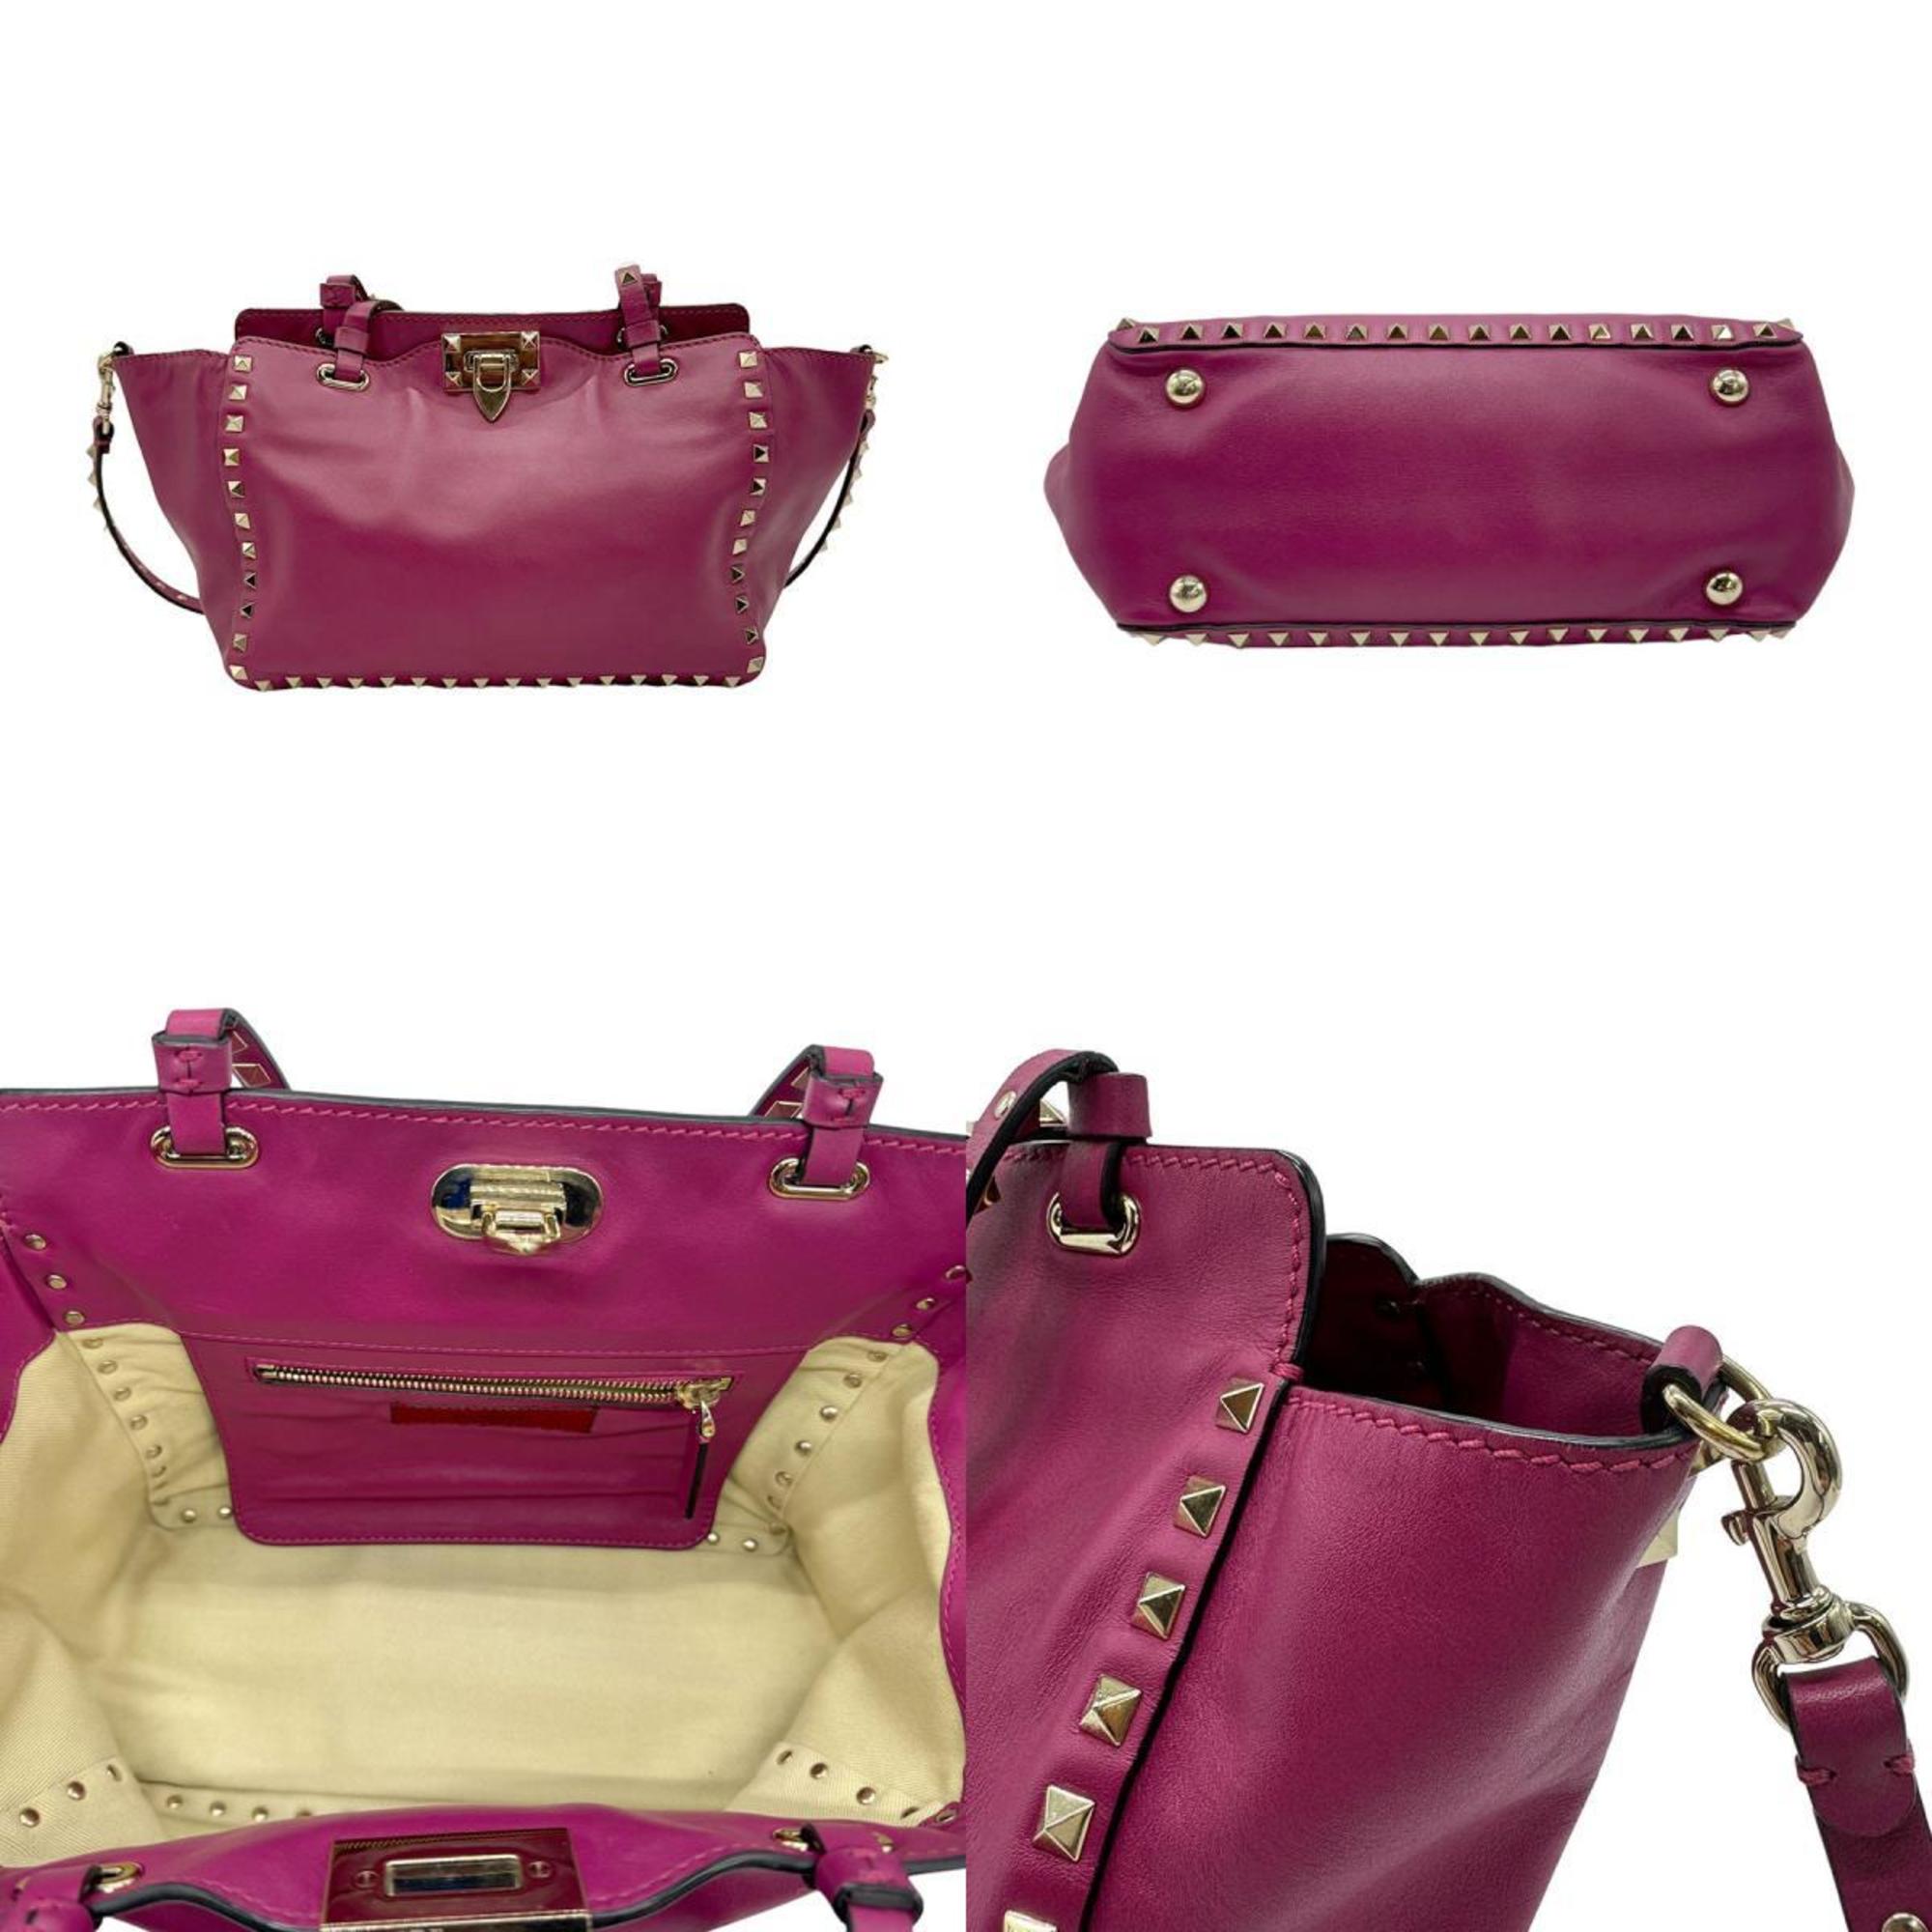 Valentino Garavani Shoulder Bag Handbag Leather Purple Pink Women's z0728